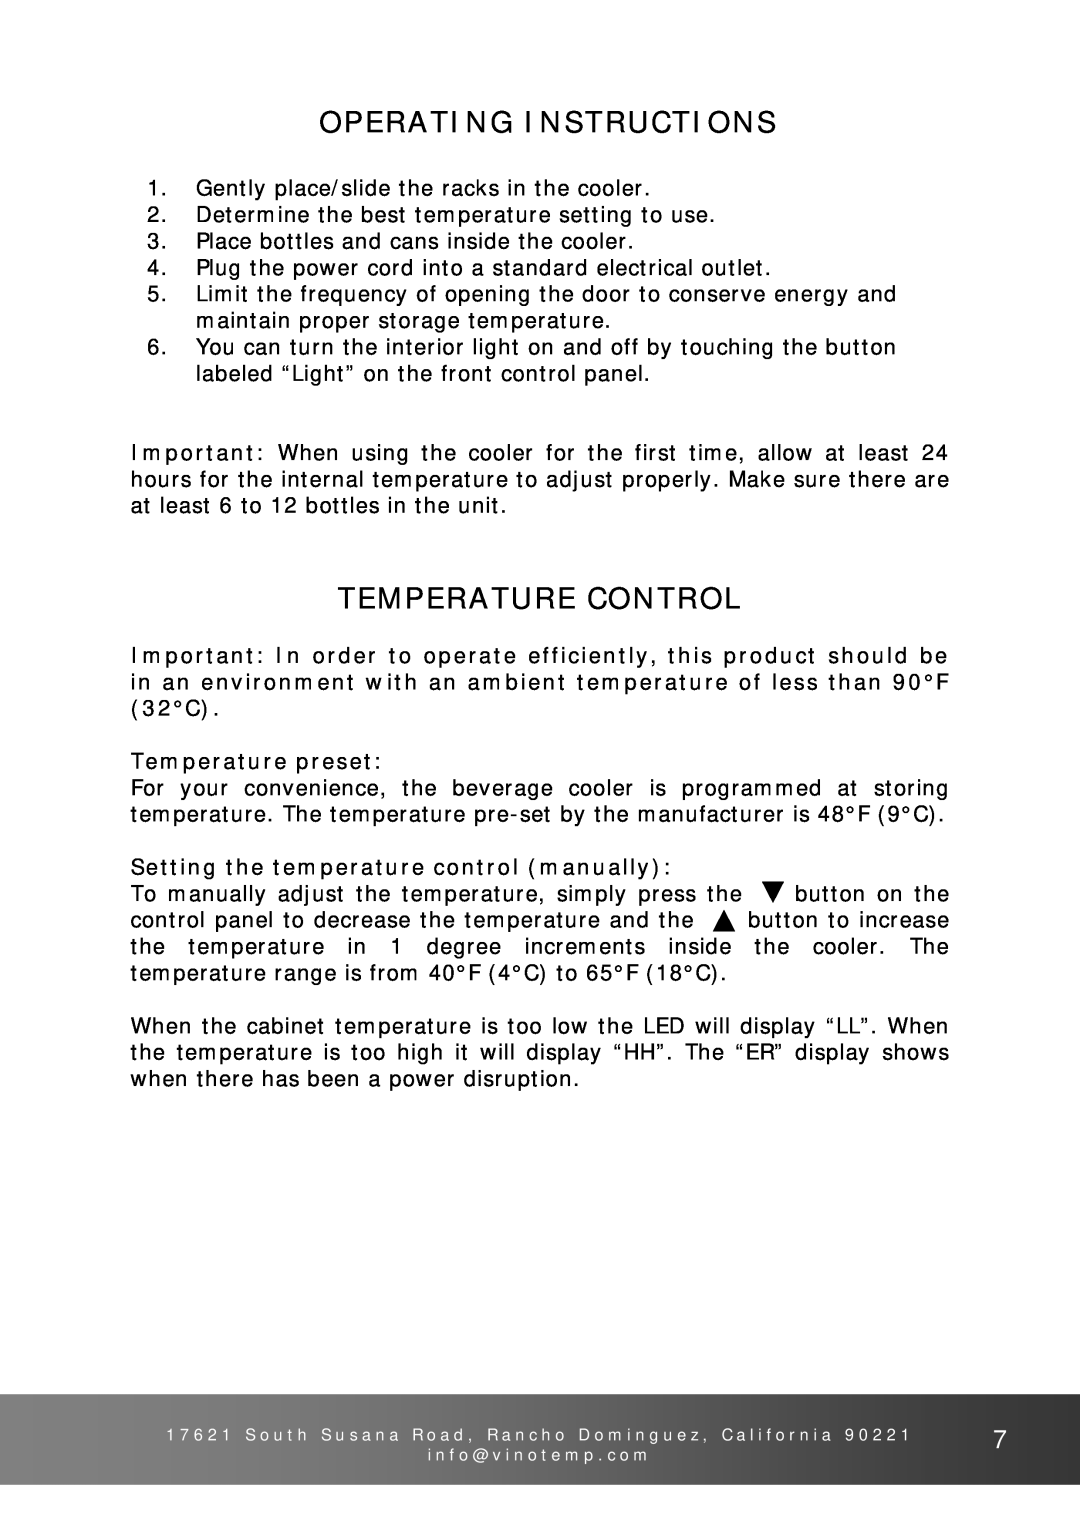 Vinotemp VT-26BC Operating Instructions, Temperature Control, Temperature preset, Setting the temperature control manually 